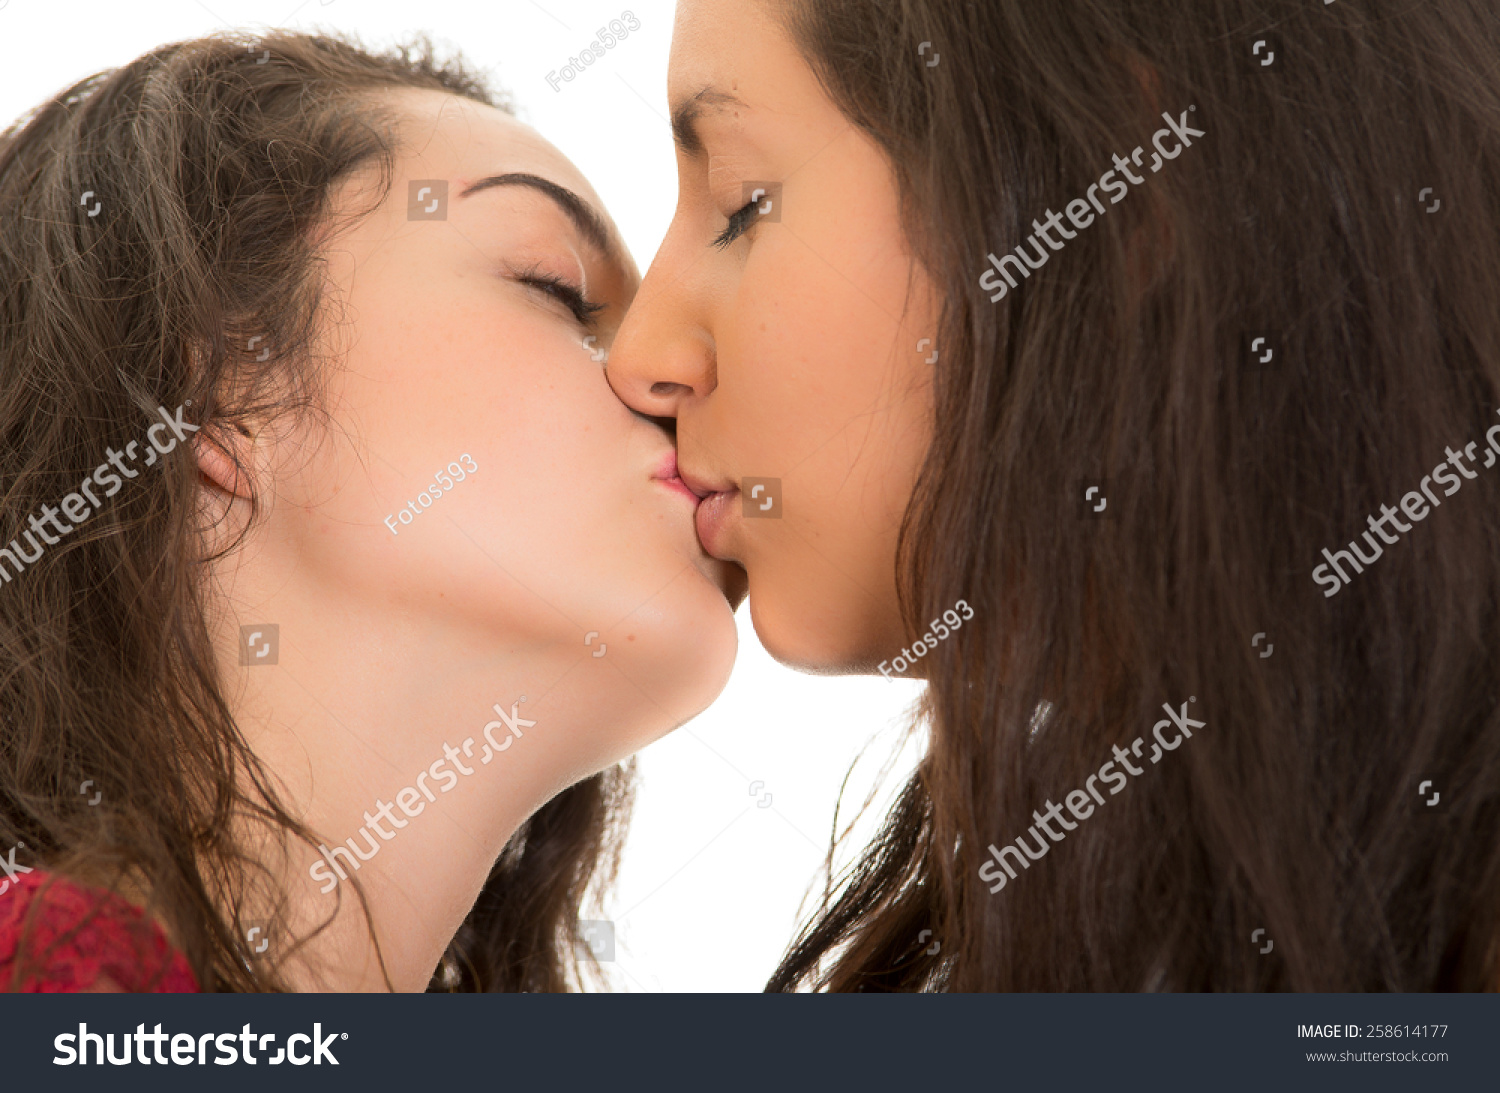 Videos Of Lesbian Kissing 76